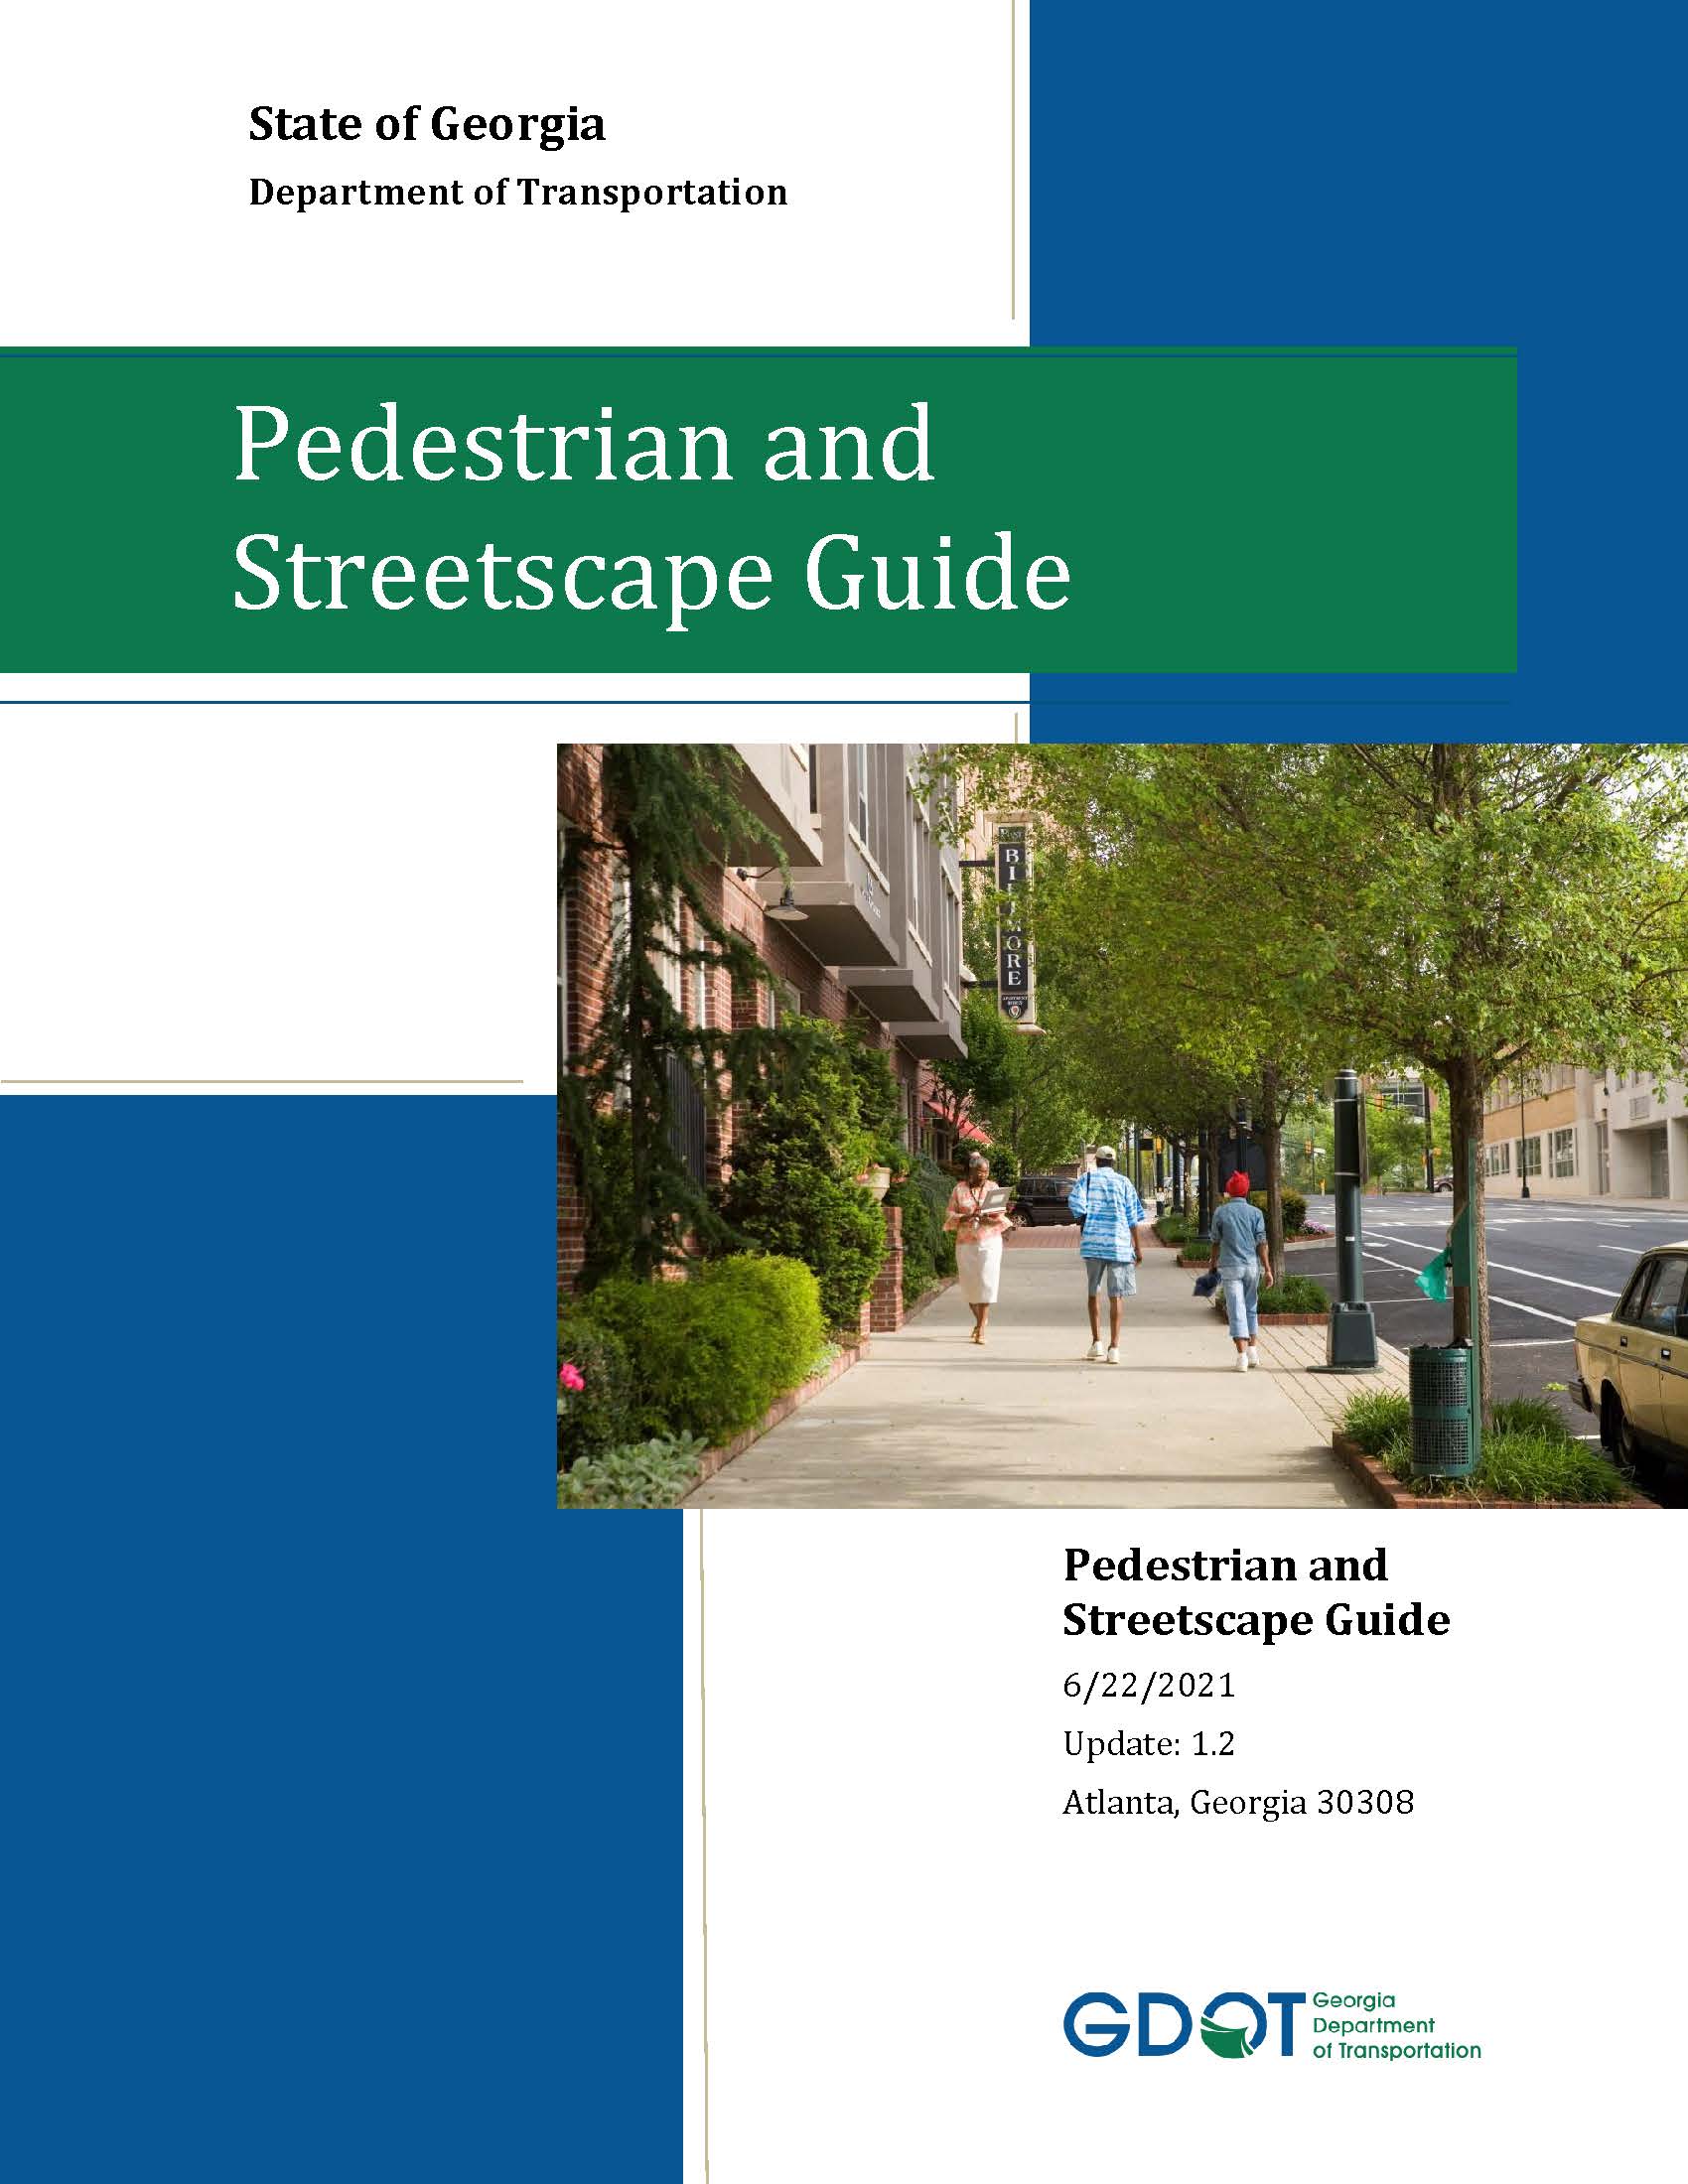 Pedestrian & Streetscape Guide